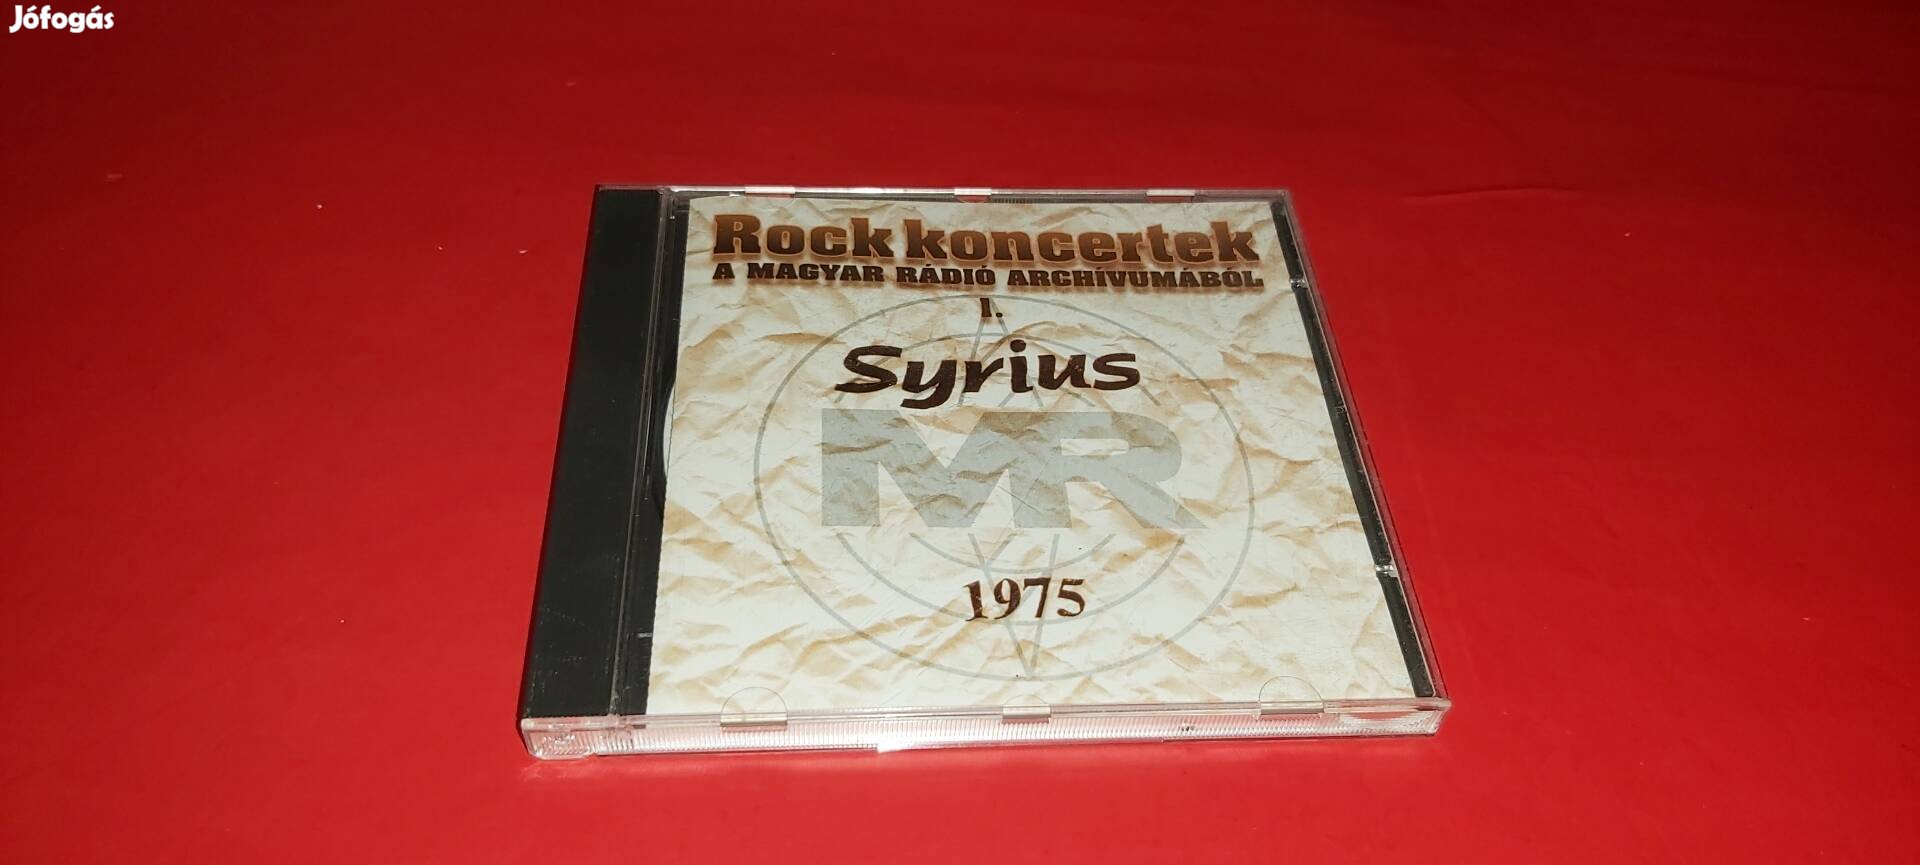 Syrius Rock Koncertek Cd 1997